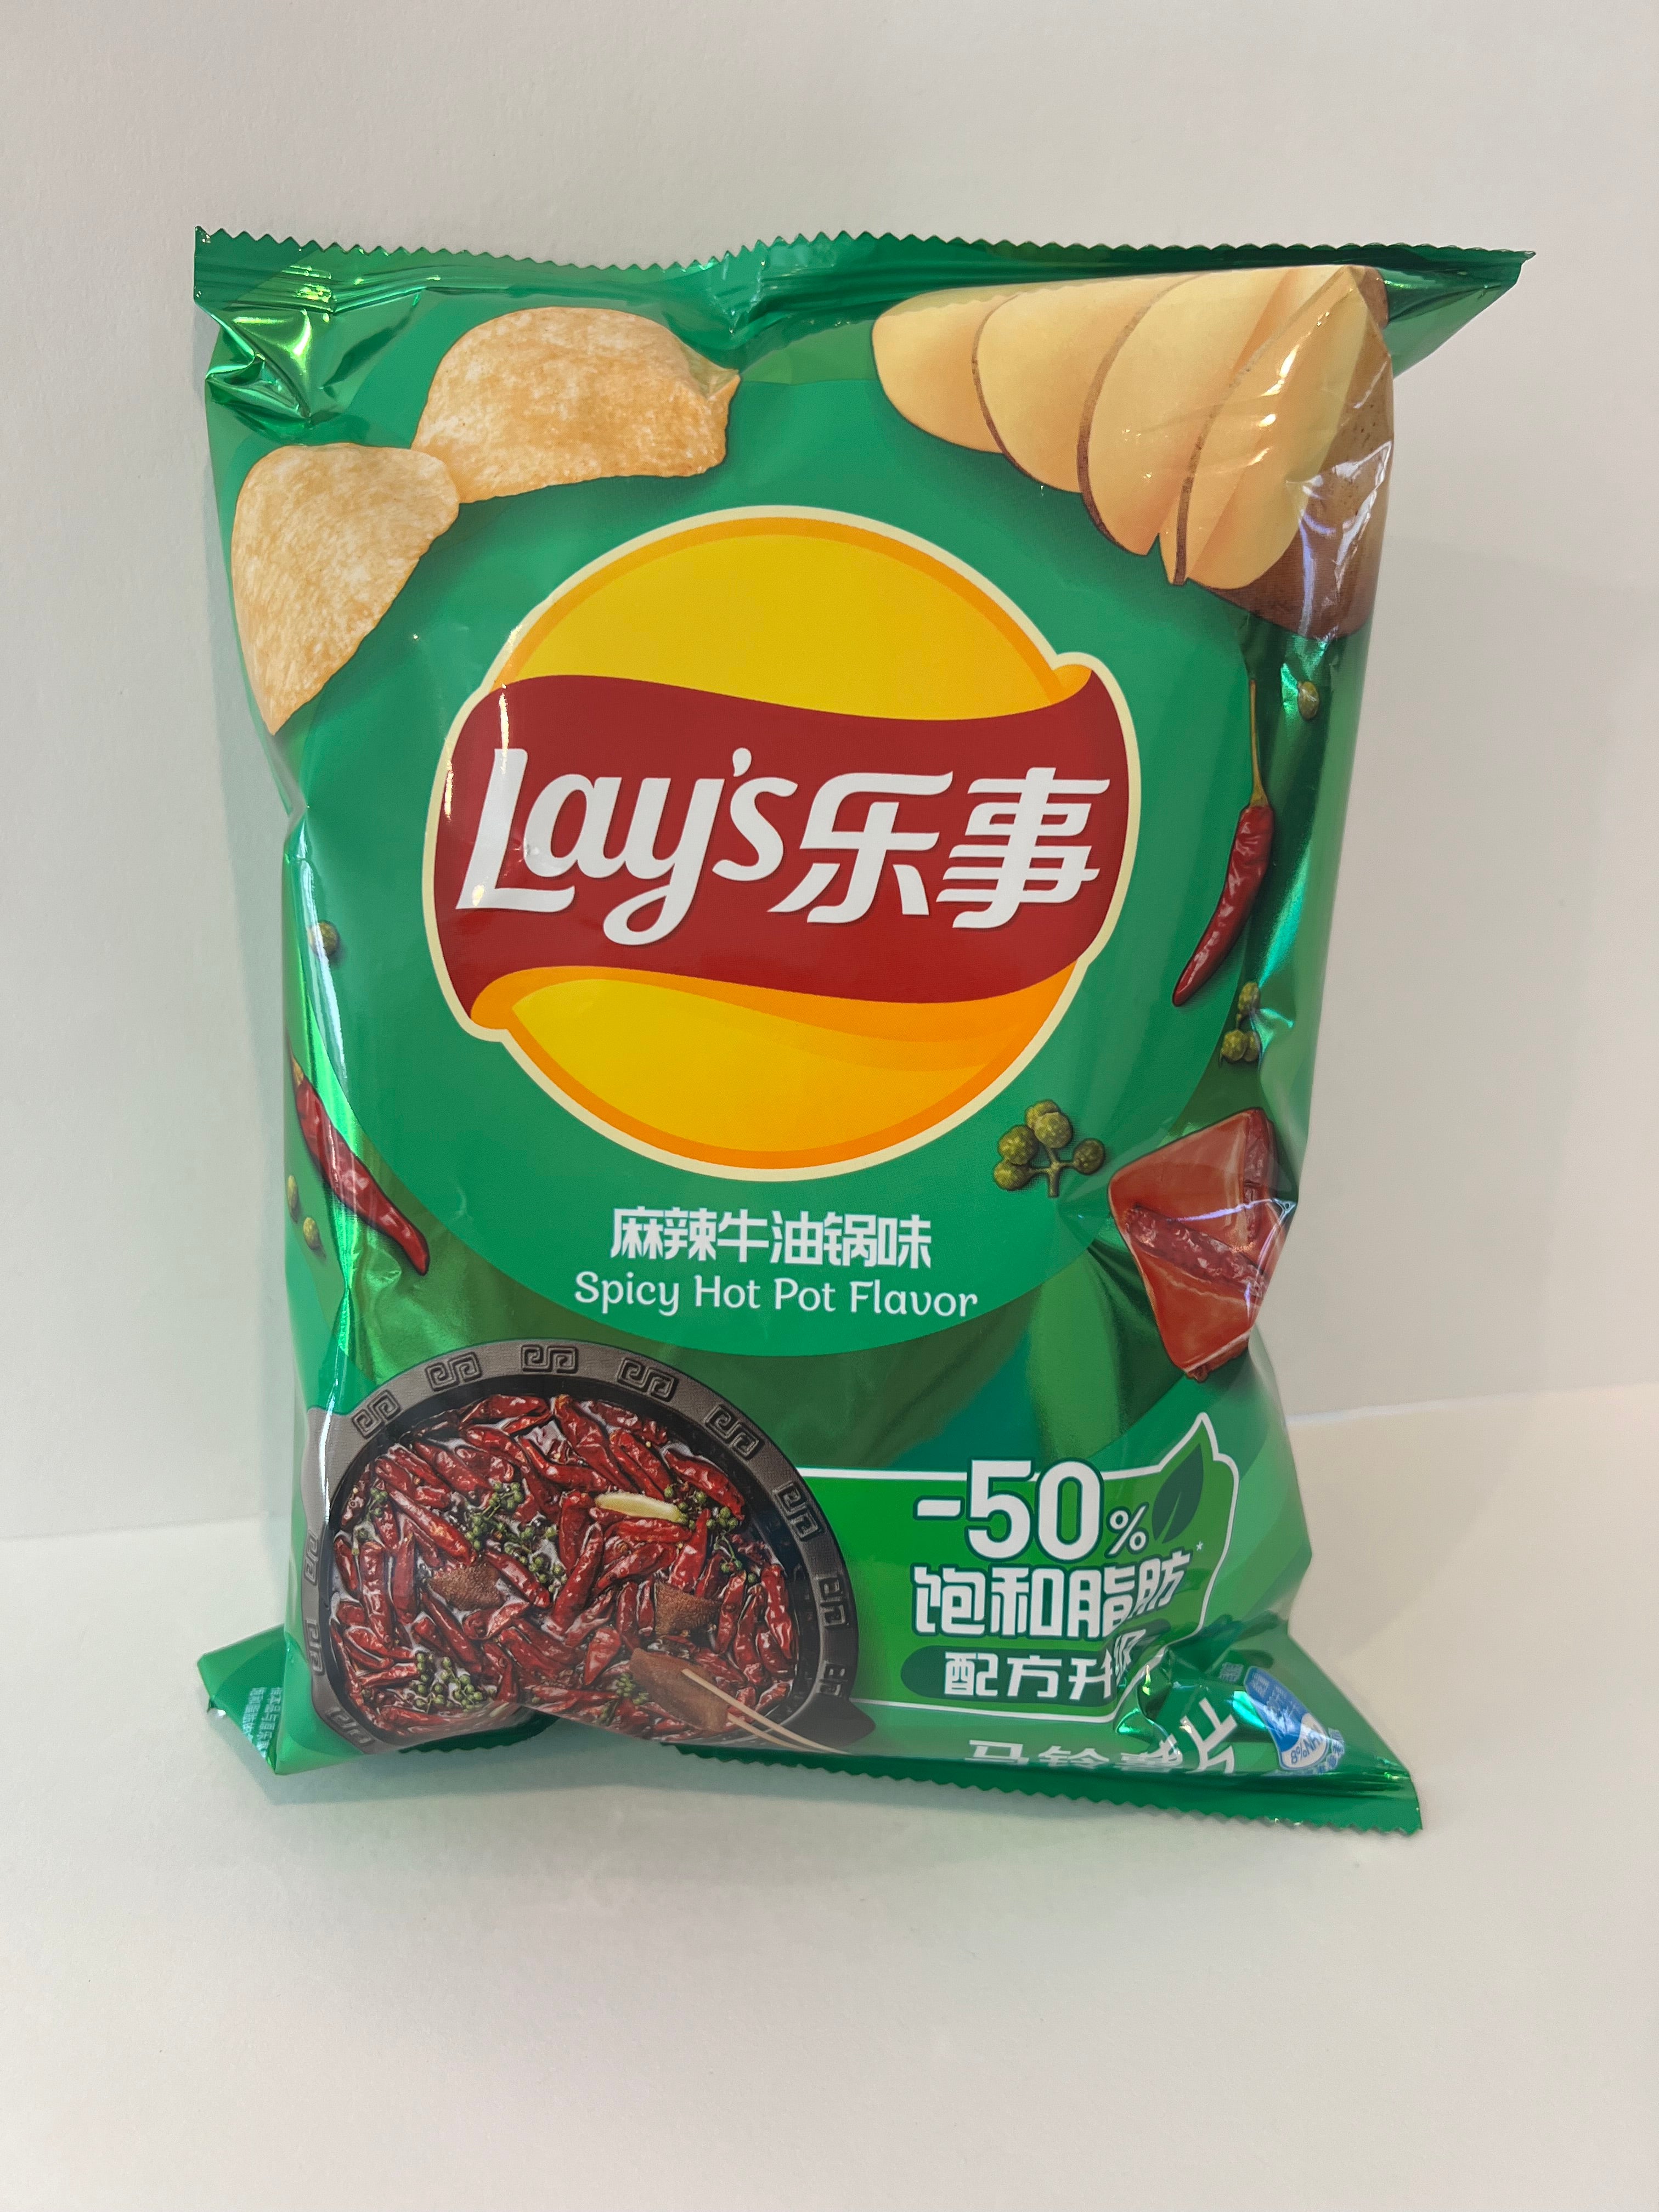 Lay's Spicy hot pot flavor